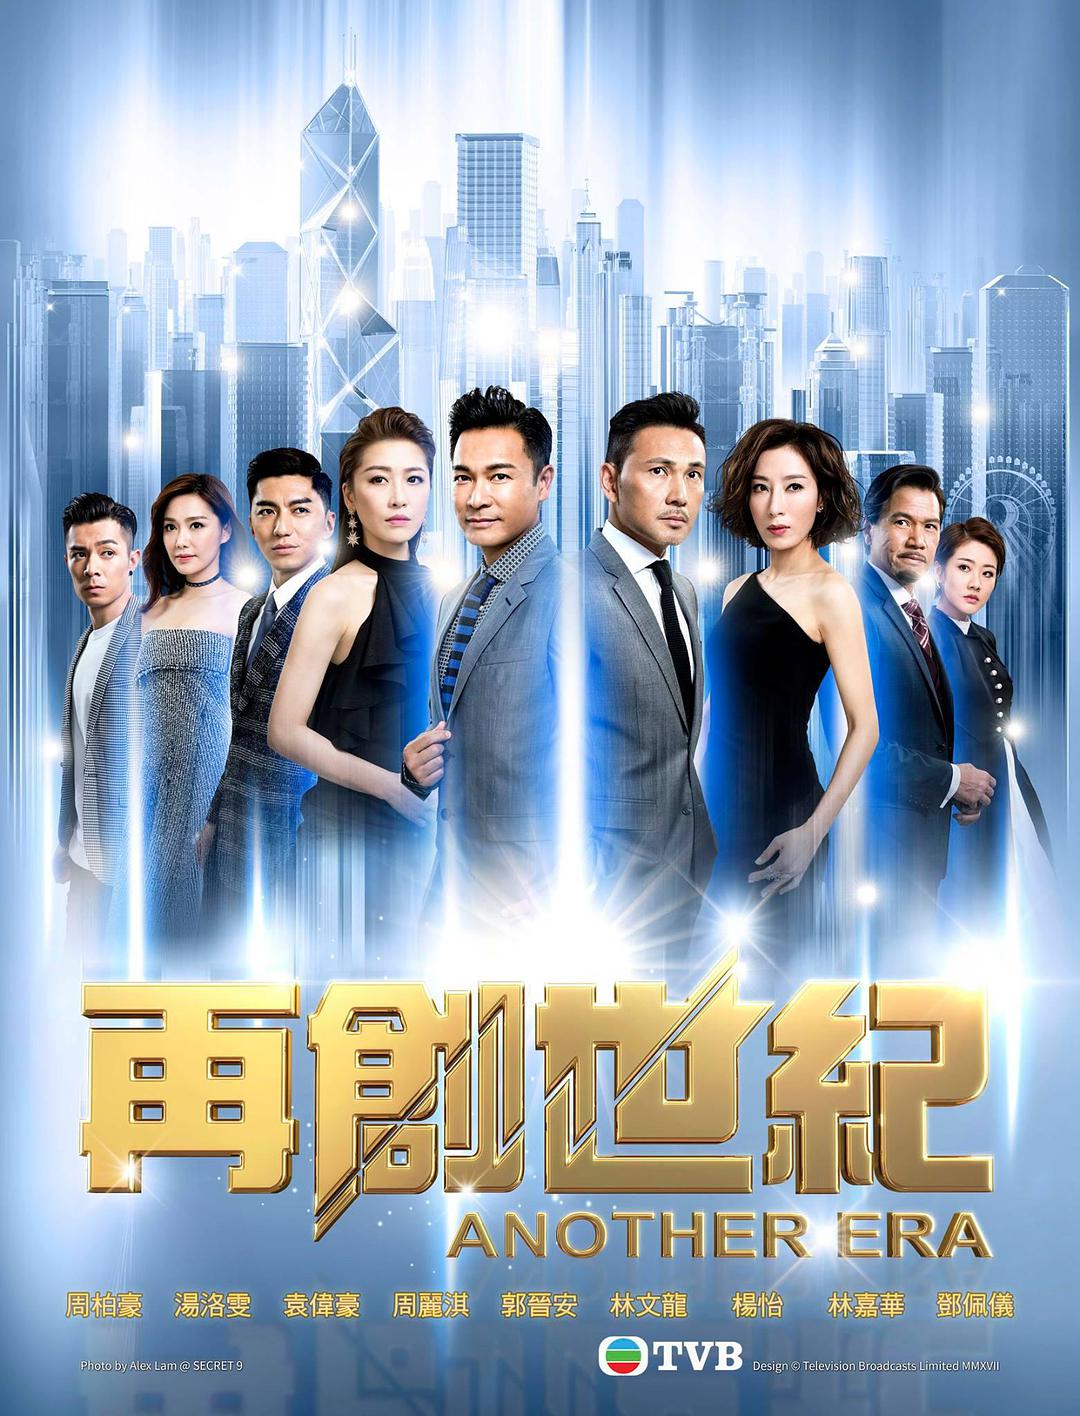 HK TV Drama, HK drama, tv series, Another Era